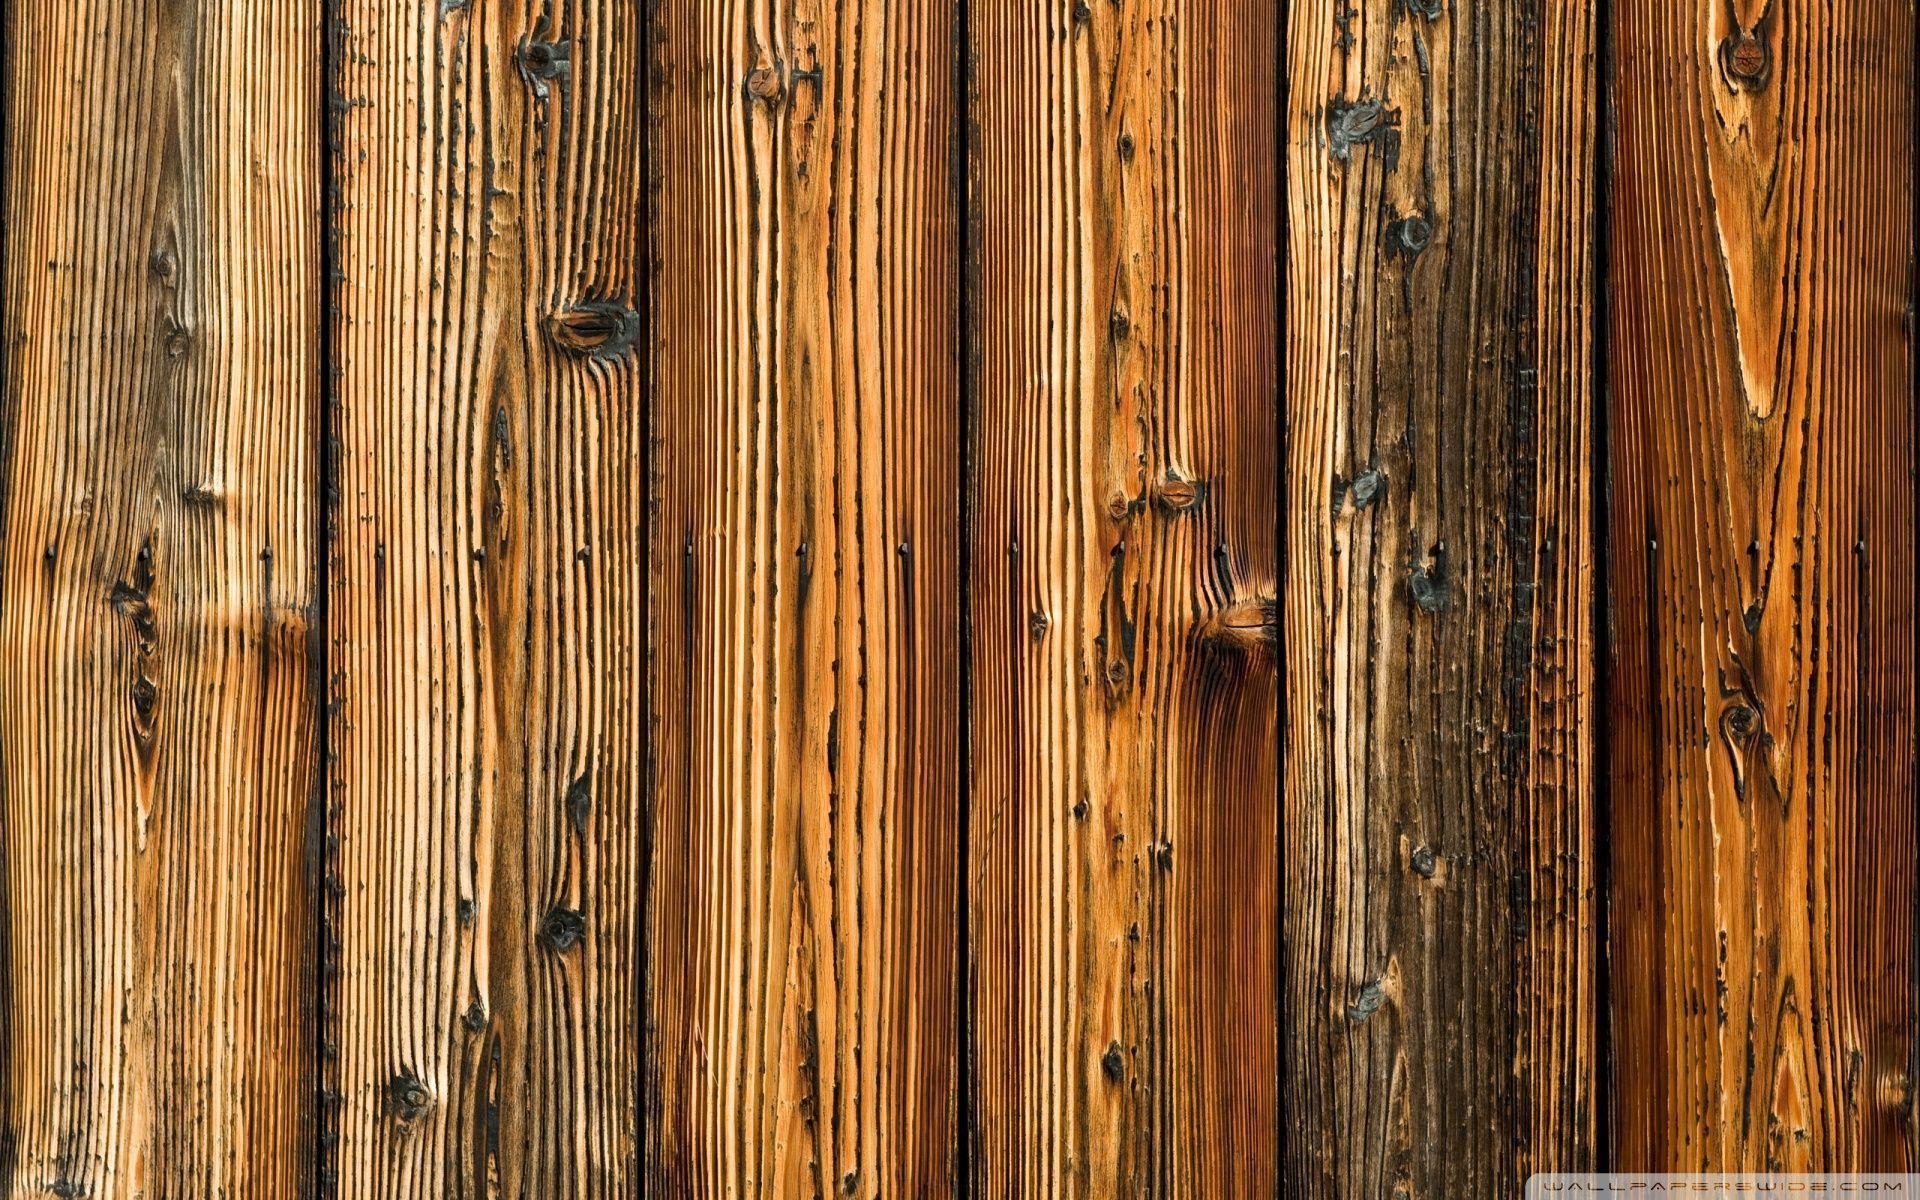 Rough Wood Boards HD desktop wallpaper, High Definition